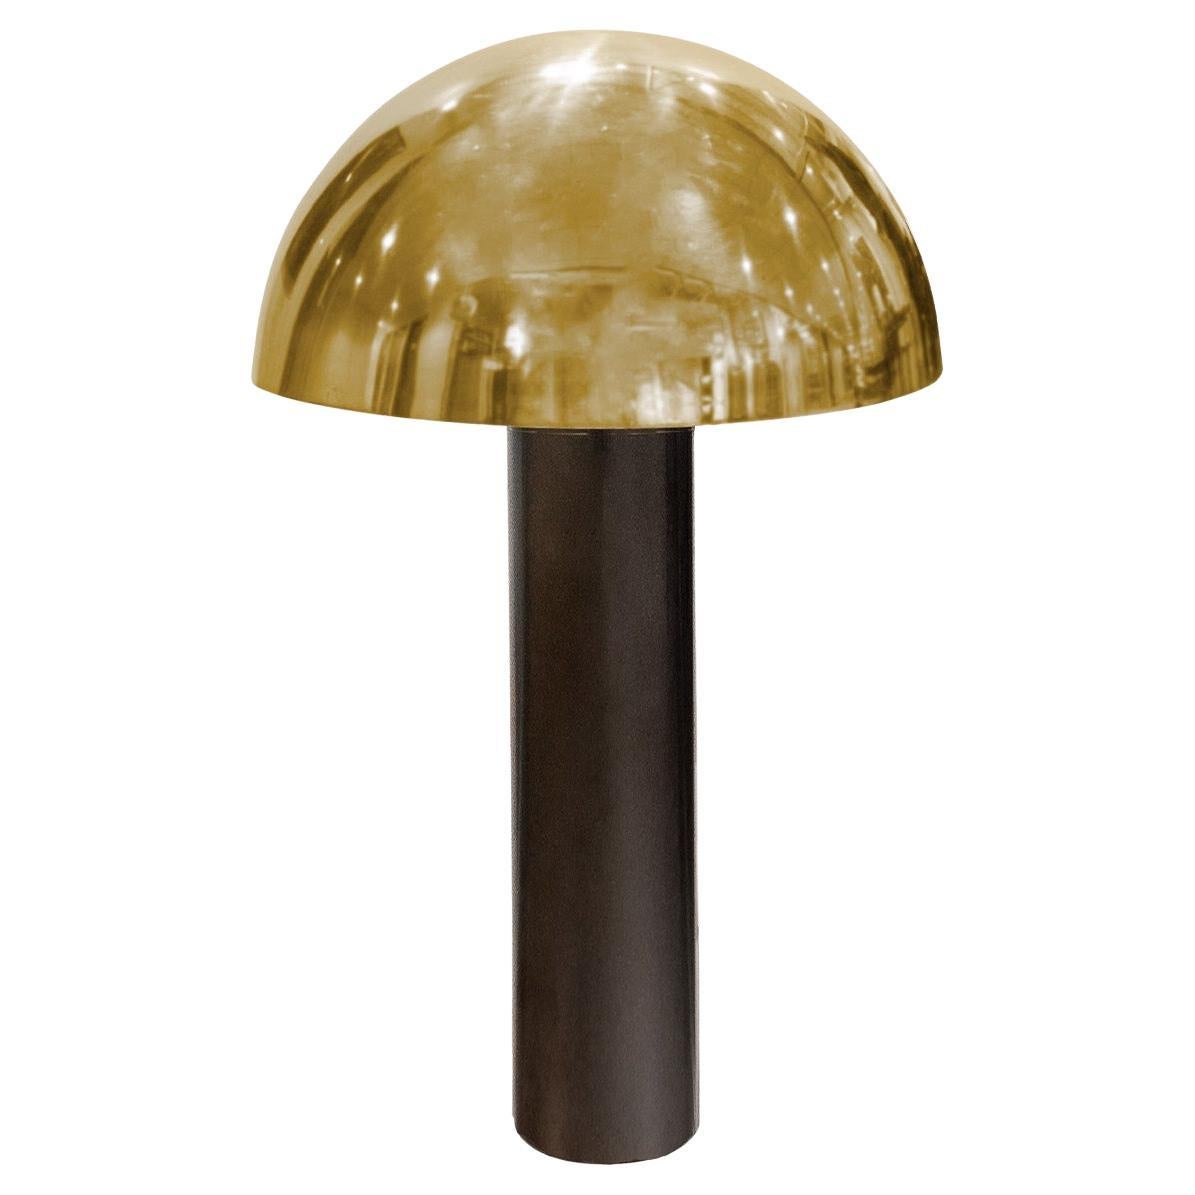 Karl Springer Rare "Mushroom Table Lamp" in Gunmetal and Brass, 1970s